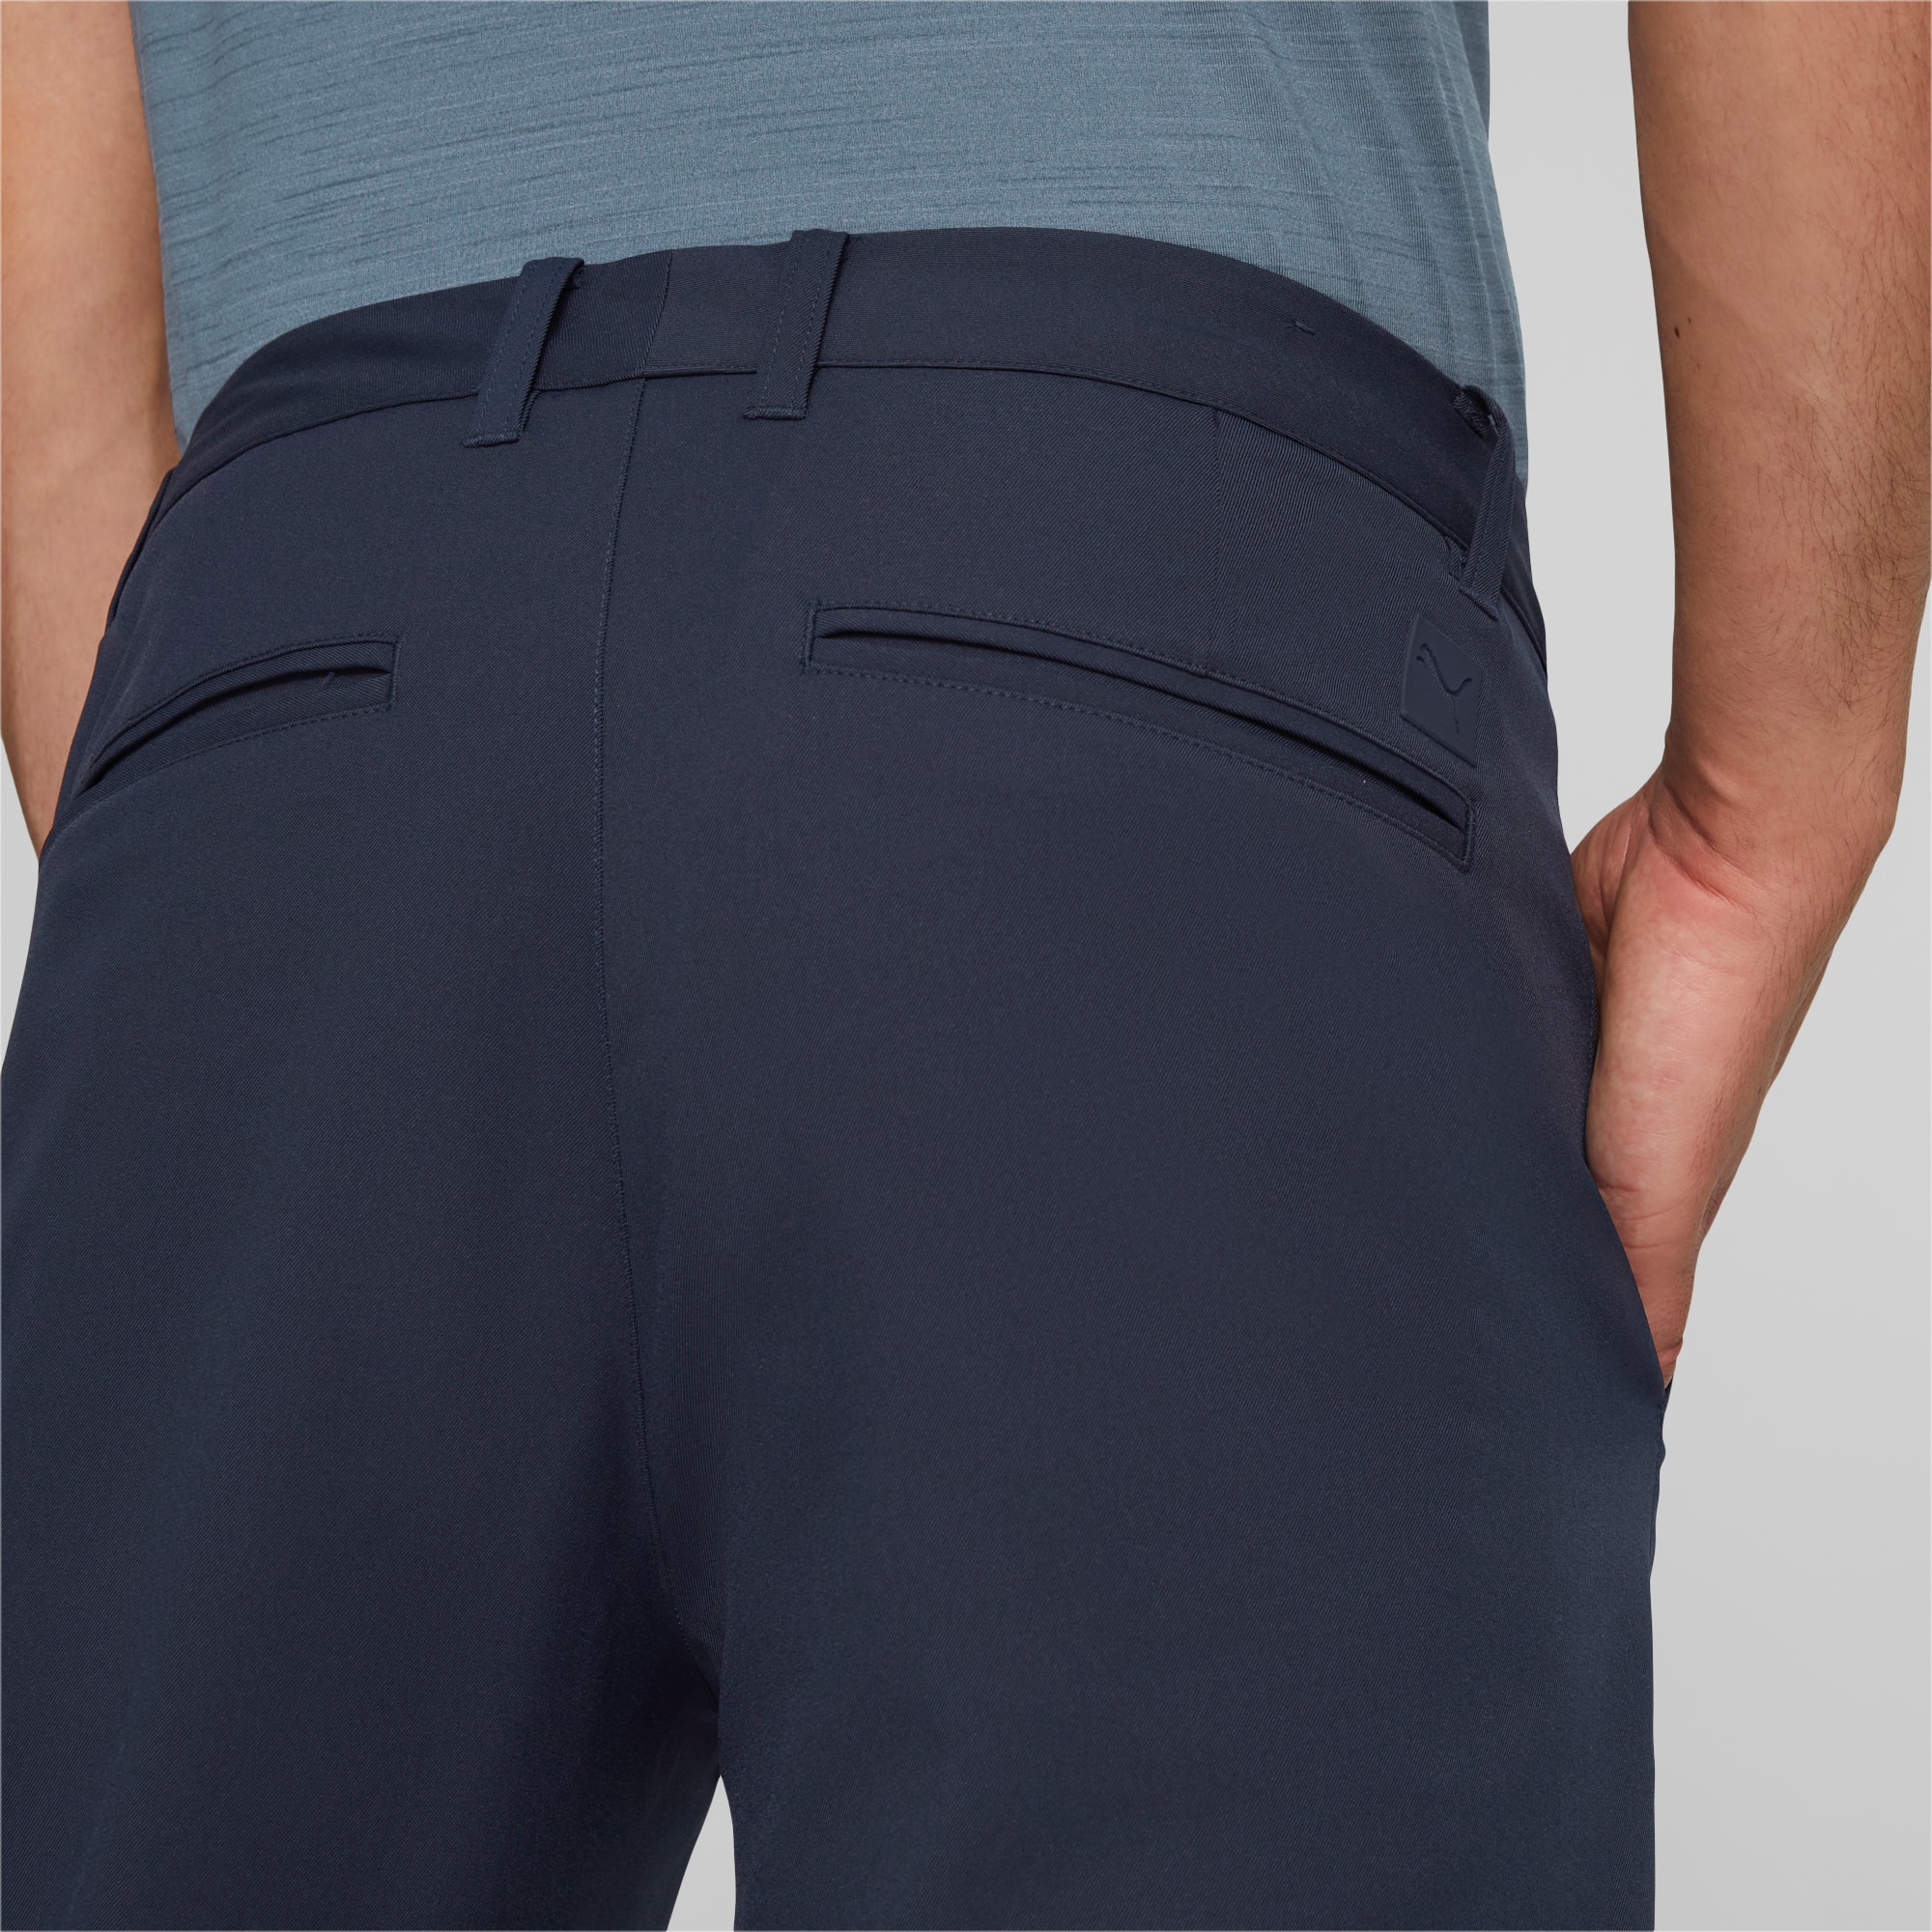 PUMA Dealer Tailored Golf Pants Men, Dark Blue, Size 30/34, Clothing